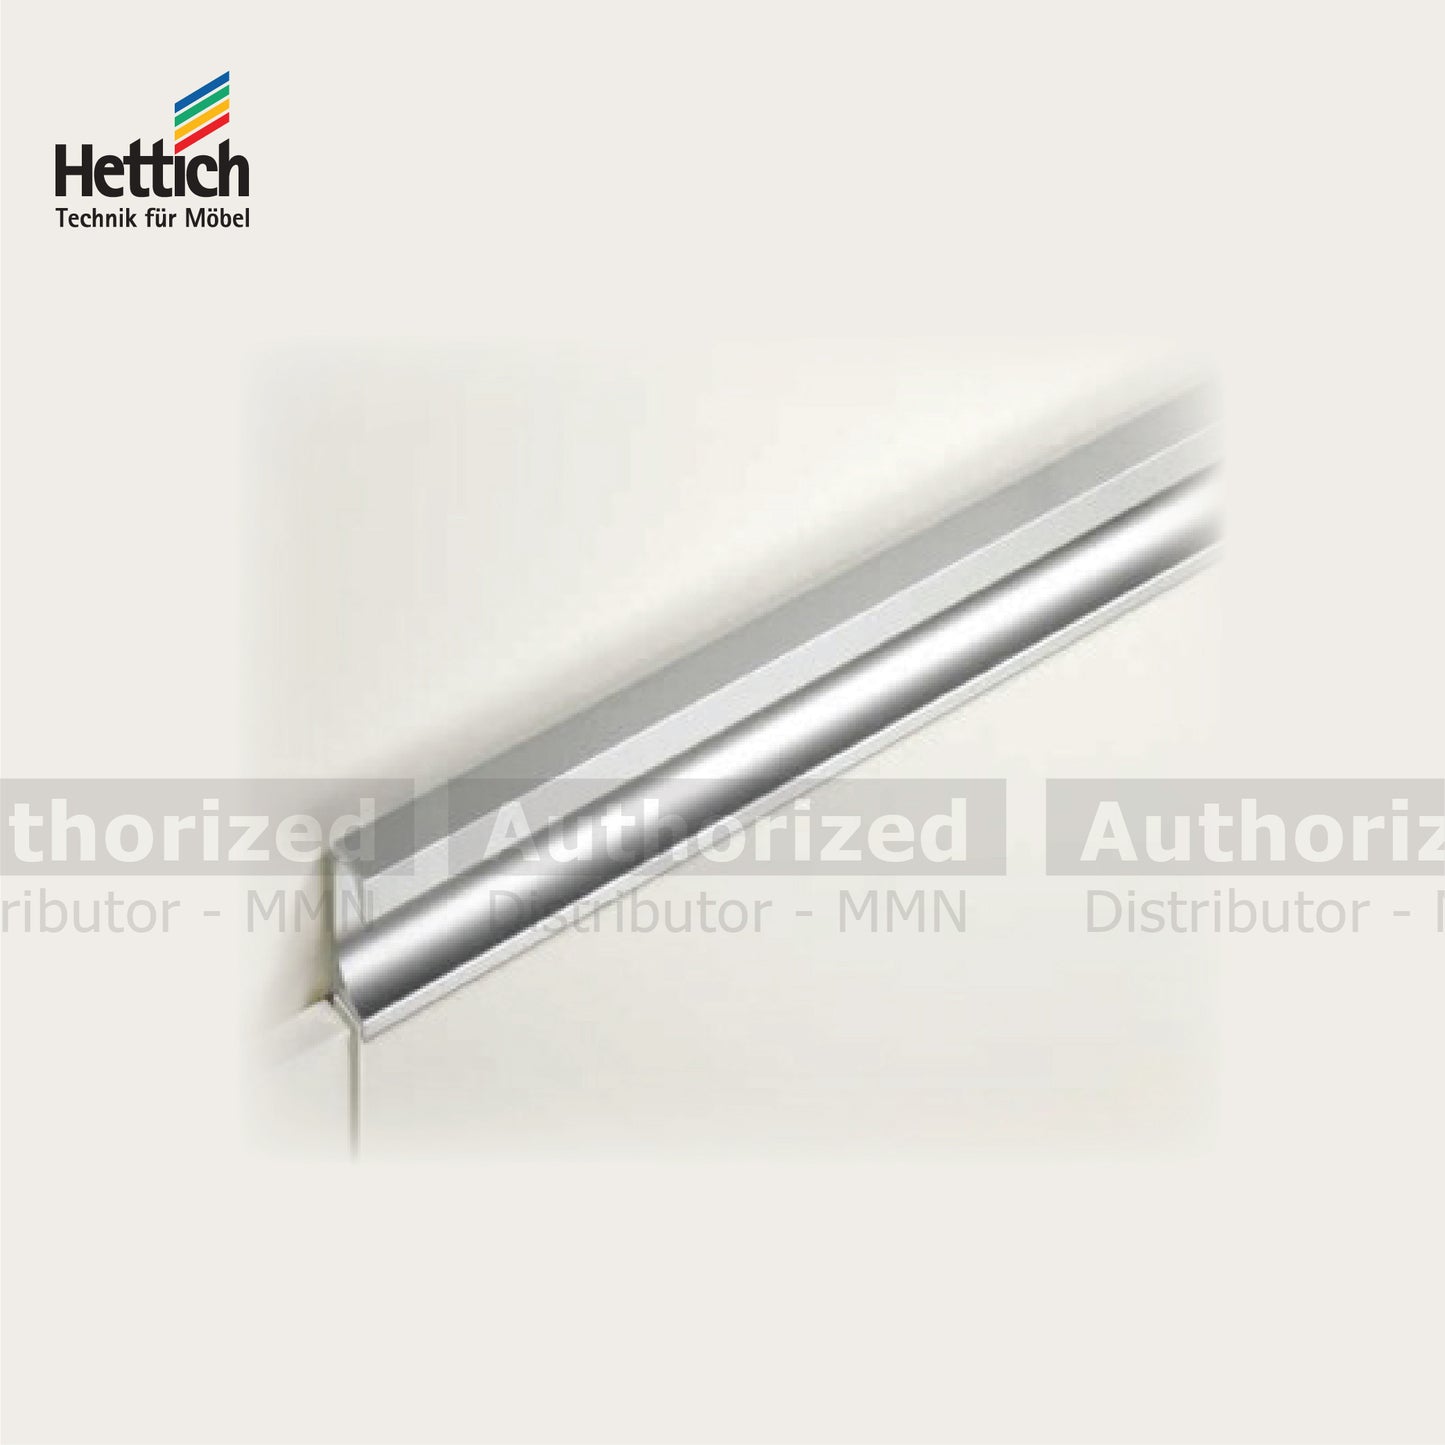 Hettich Eslinga Profile Handle G Type, Length 3000mm, Aluminium, Stainless Steel, Champagne & Black Finish - HT92